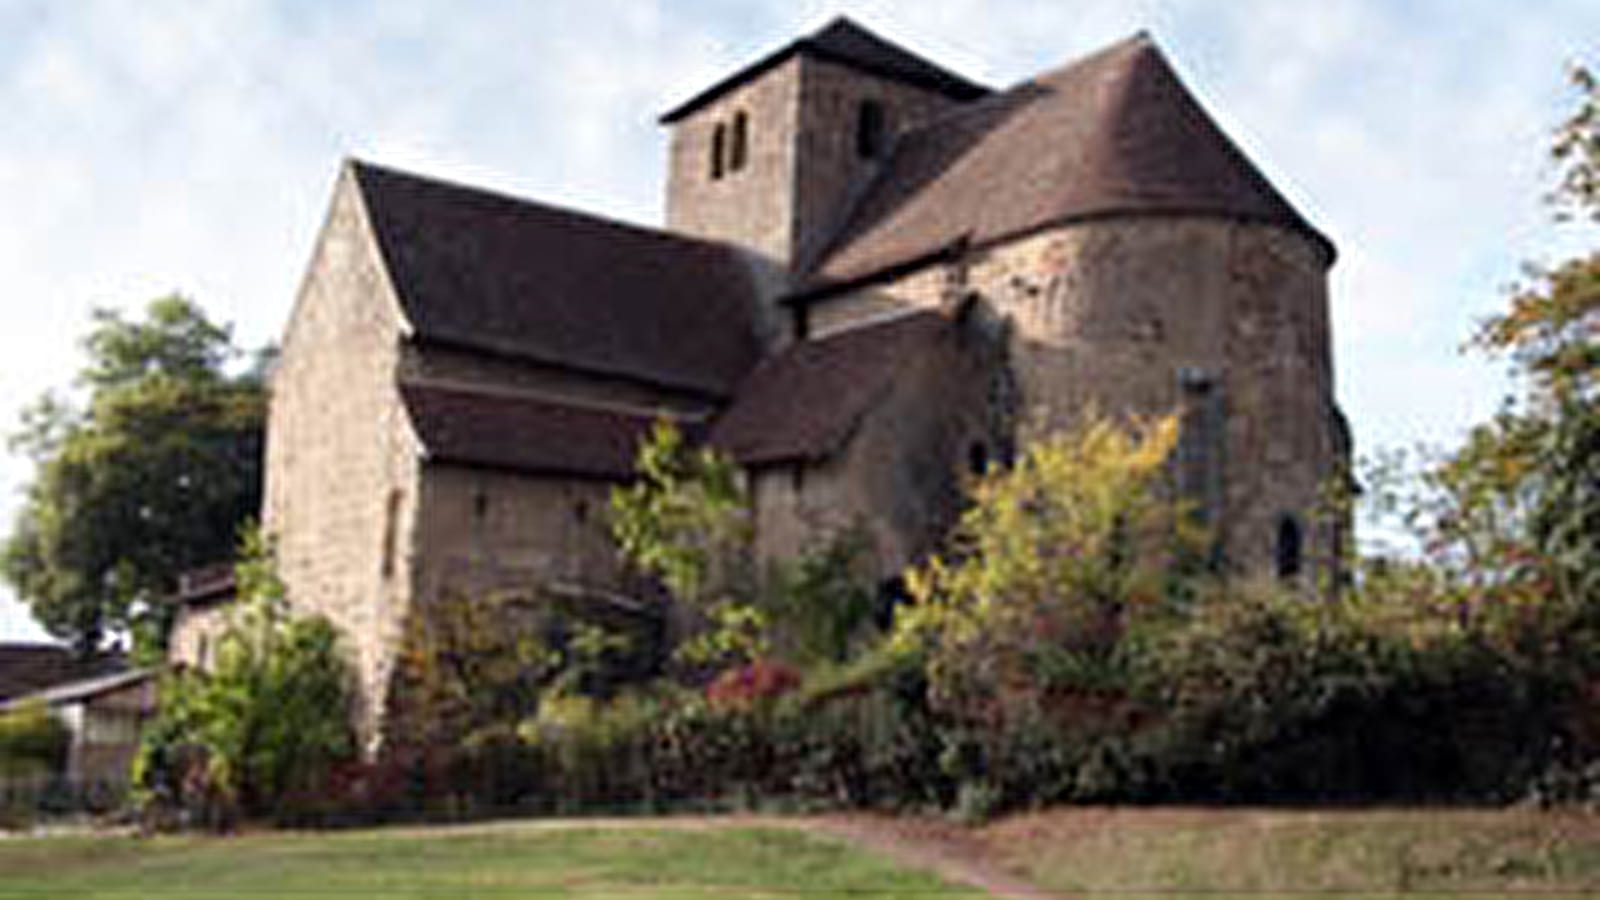 Eglise romane Saint-Nazaire